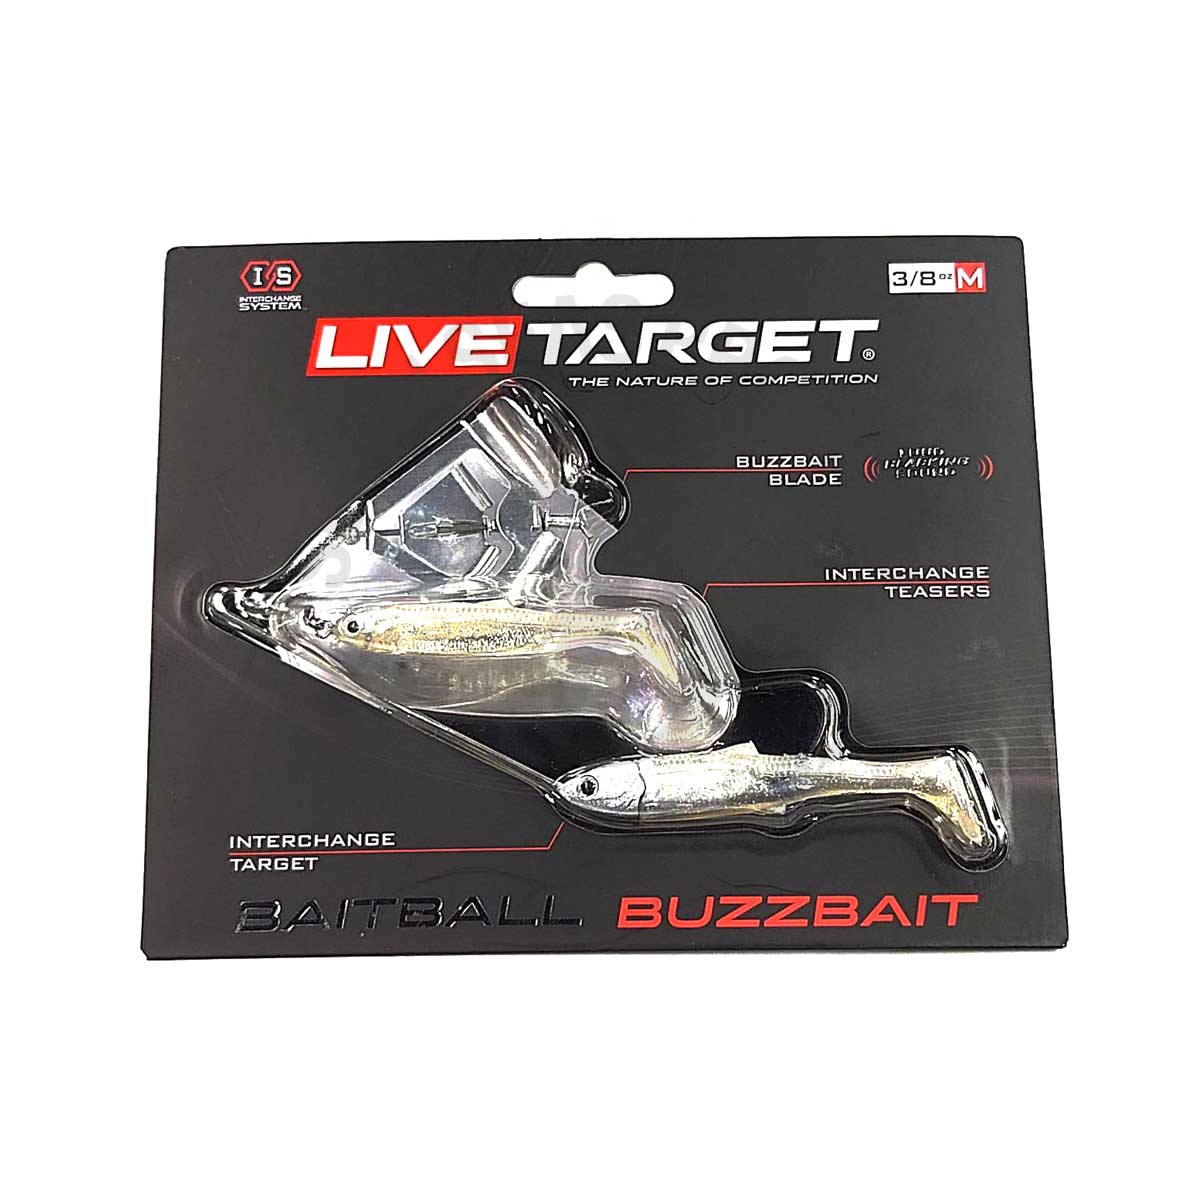 Live Target Baitball Buzzbait 3/8oz-M #Pearl White/Silver*เหยื่อบัสเบท - 7  SEAS PROSHOP (THAILAND)